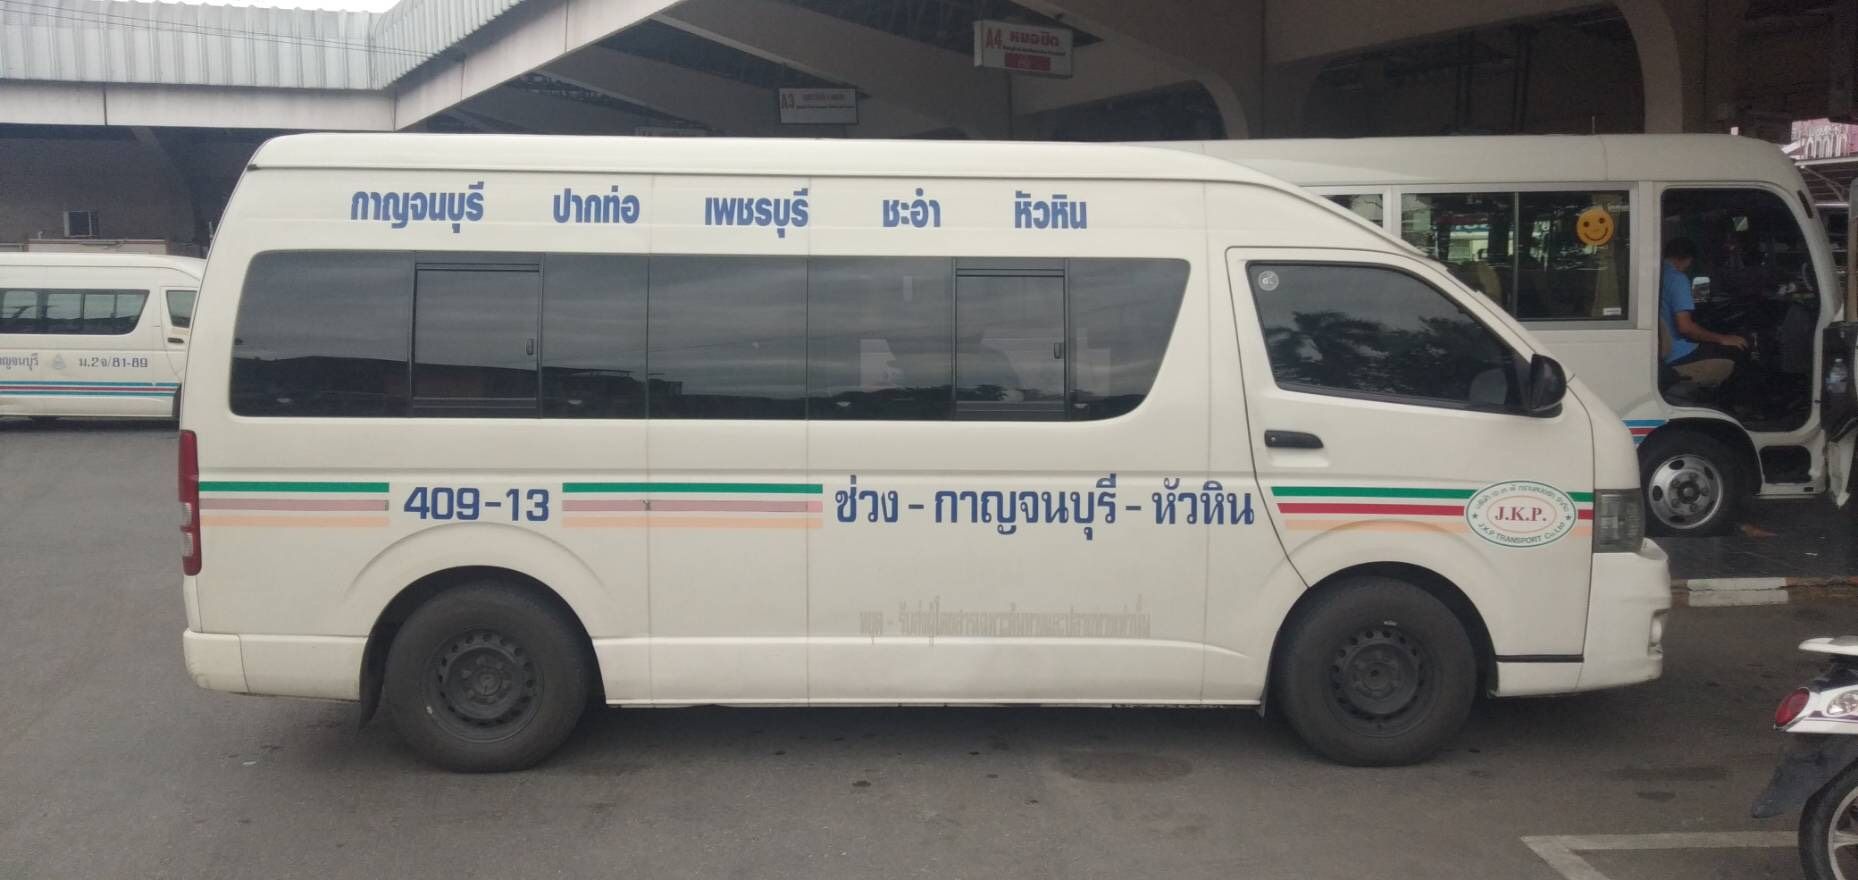 monsiri travel kanchanaburi minibus